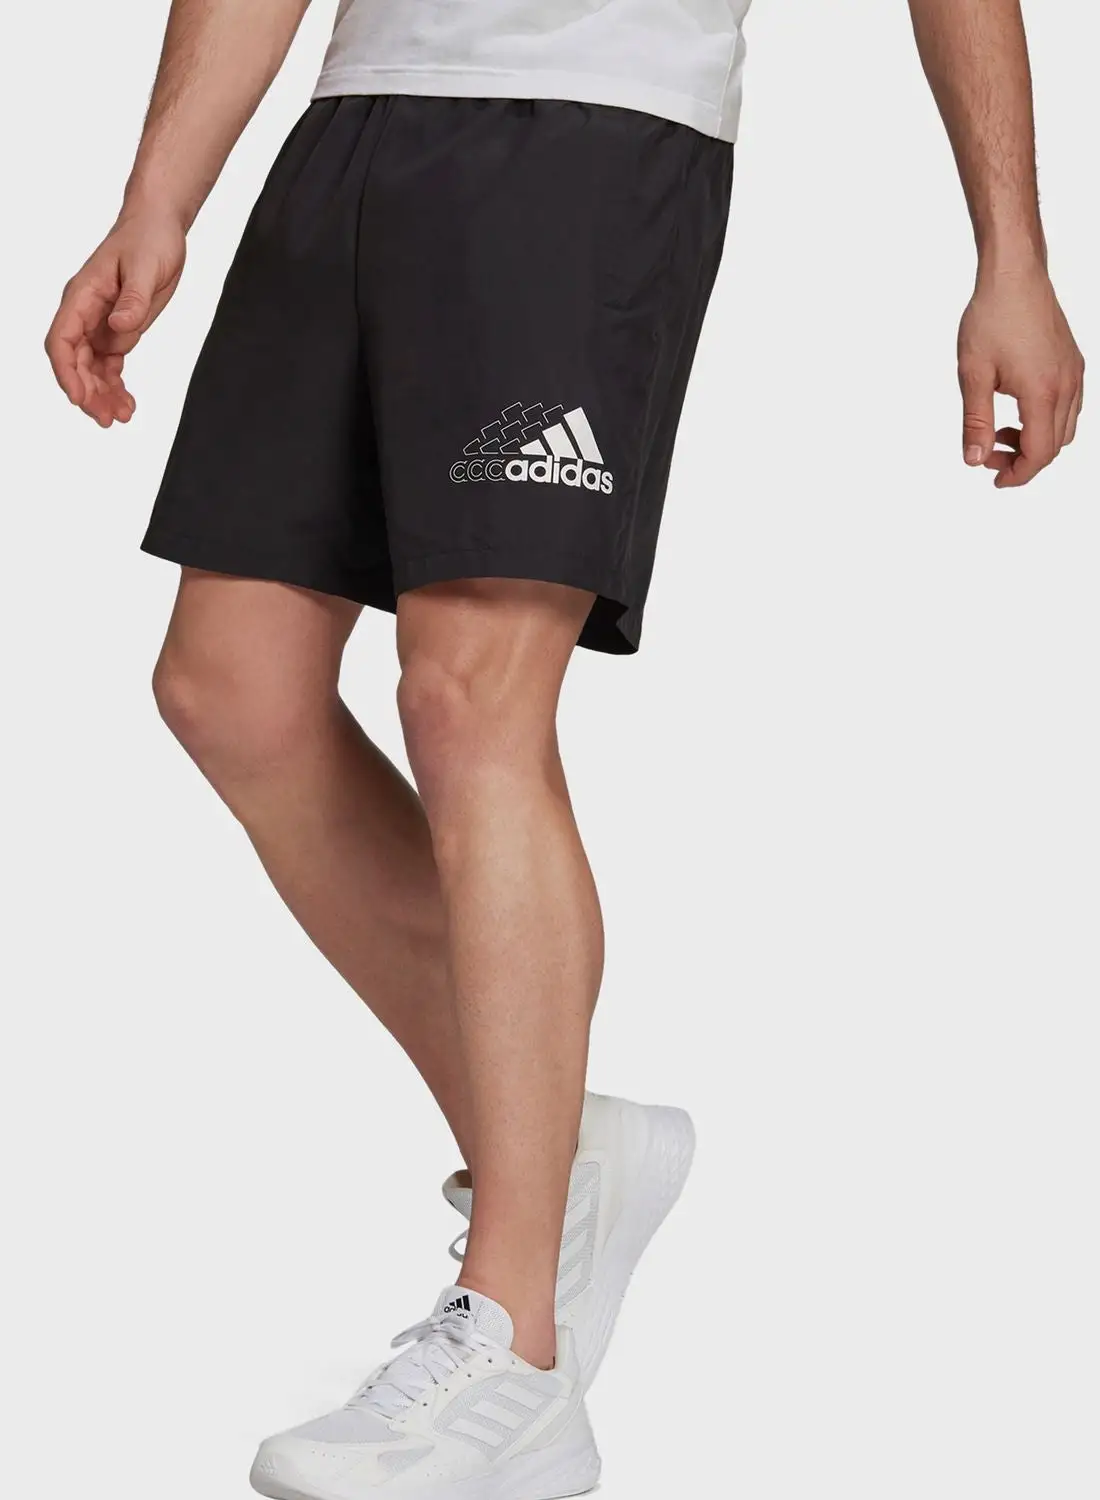 Adidas Brand Love Shorts